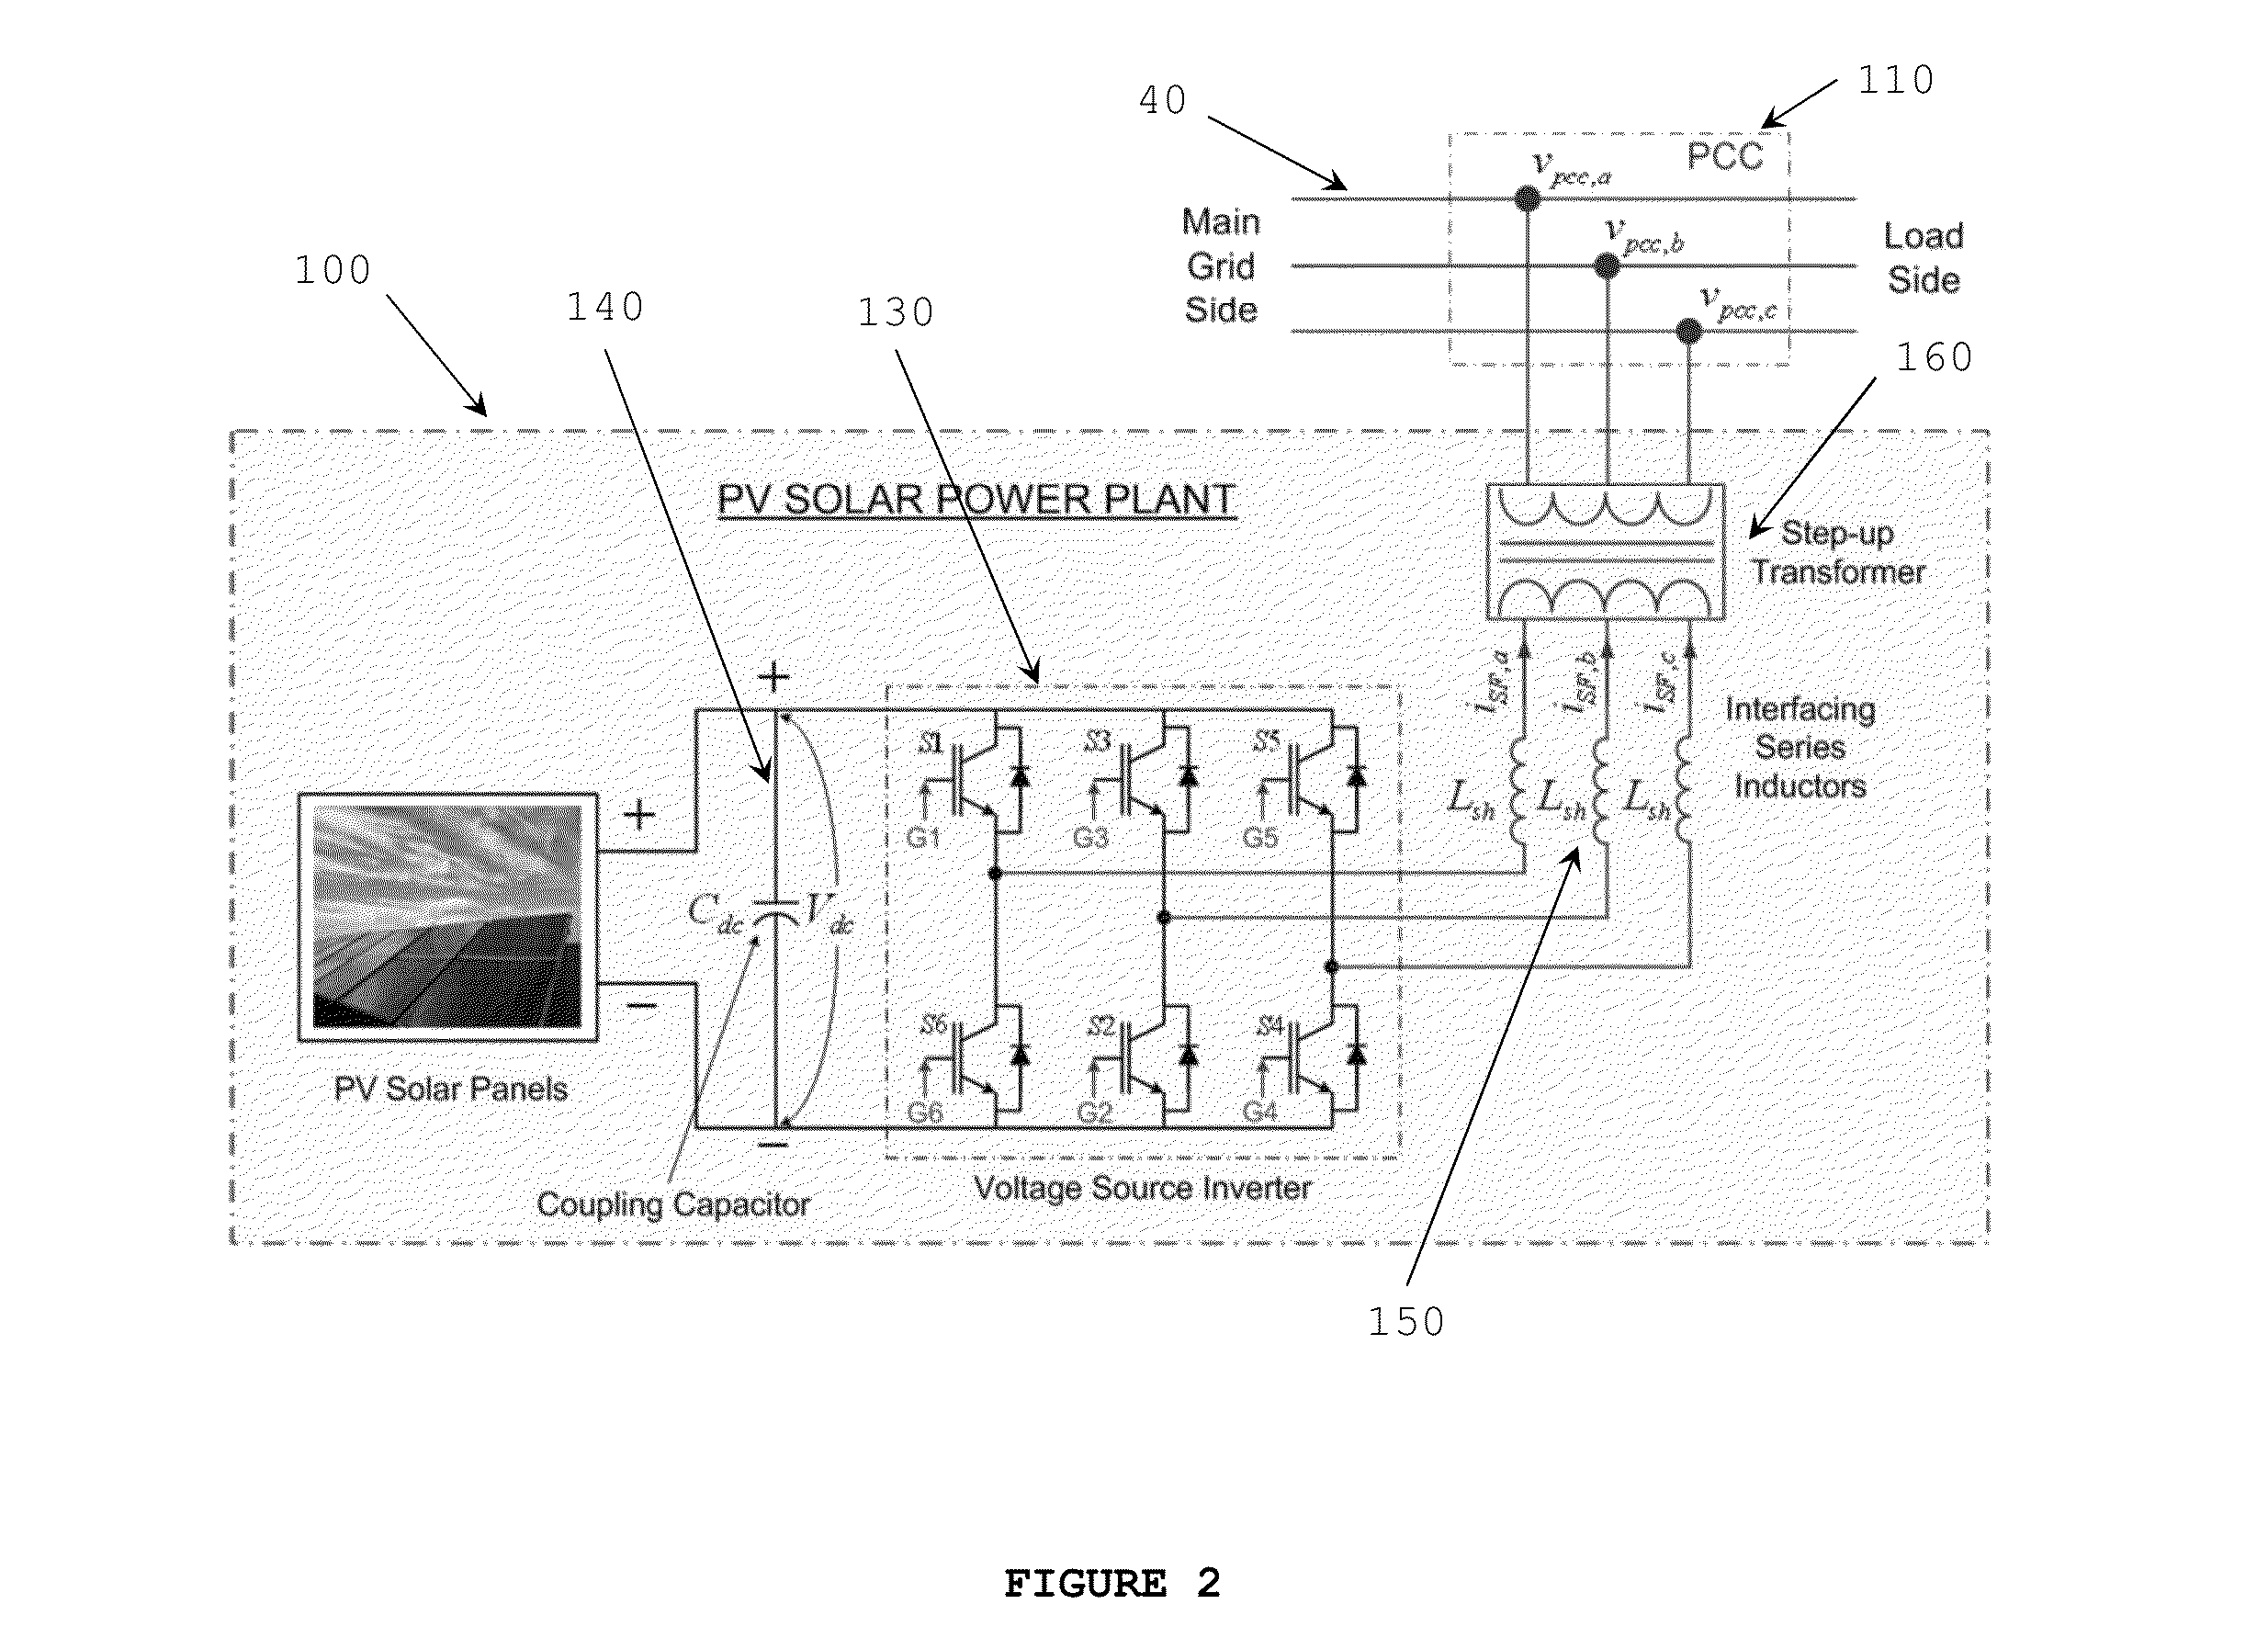 Fault detection and short circuit current management technique for inverter based distributed generators (DG)